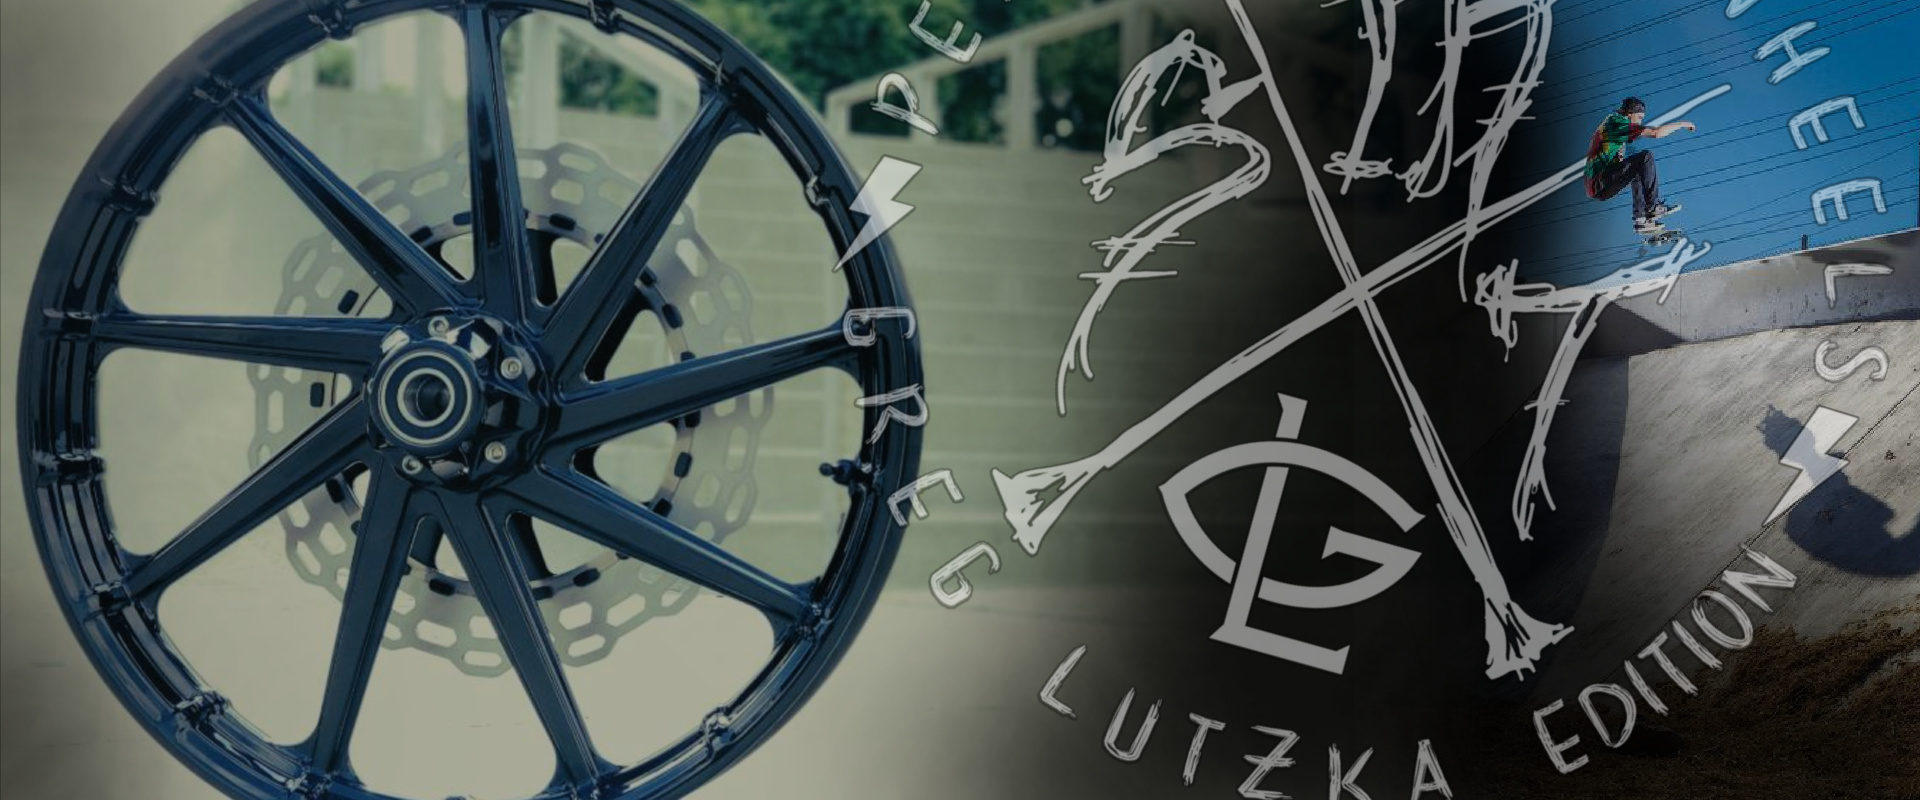 Greg Lutzka Edition Motorcycle Wheel